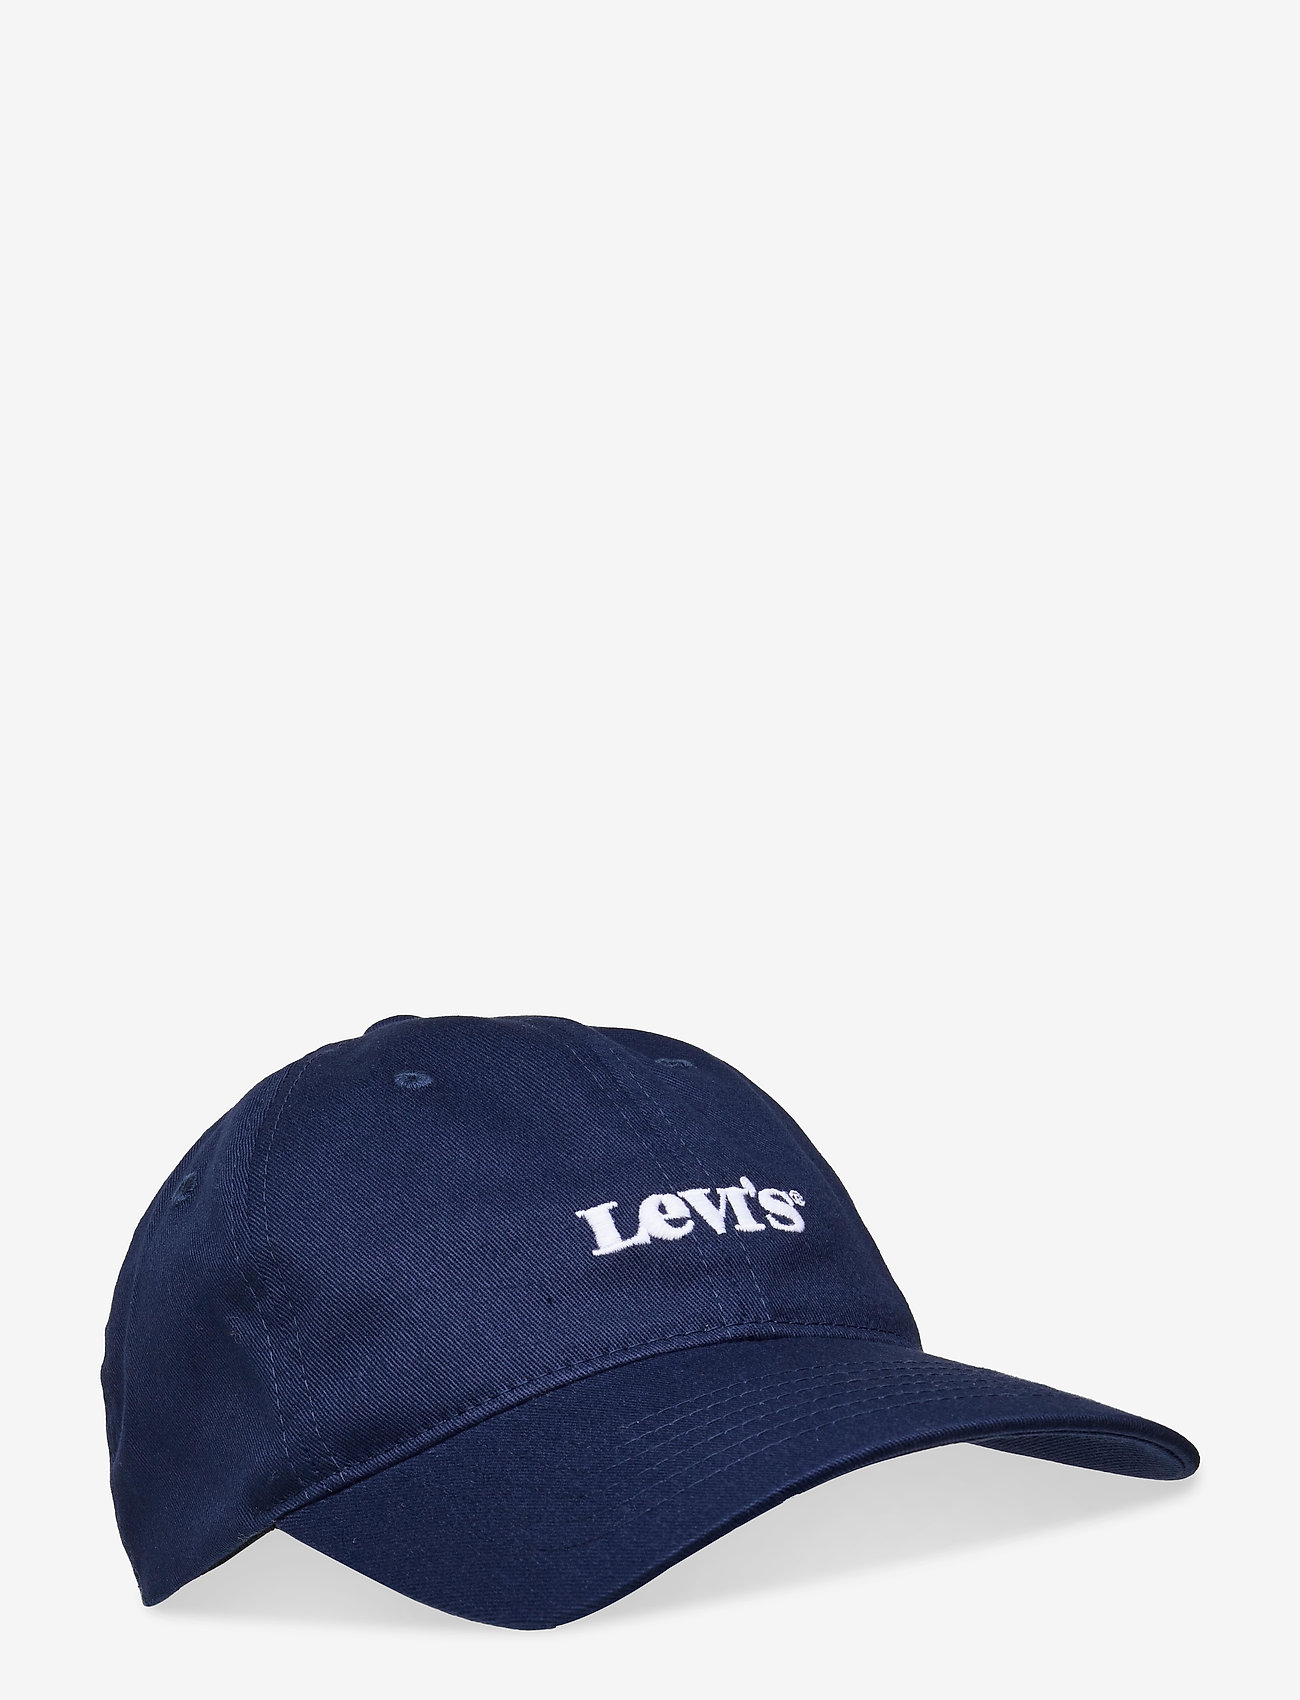 Levi’s Footwear & Acc - VINTAGE MODERN FLEXFIT CAP - navy blue - 0